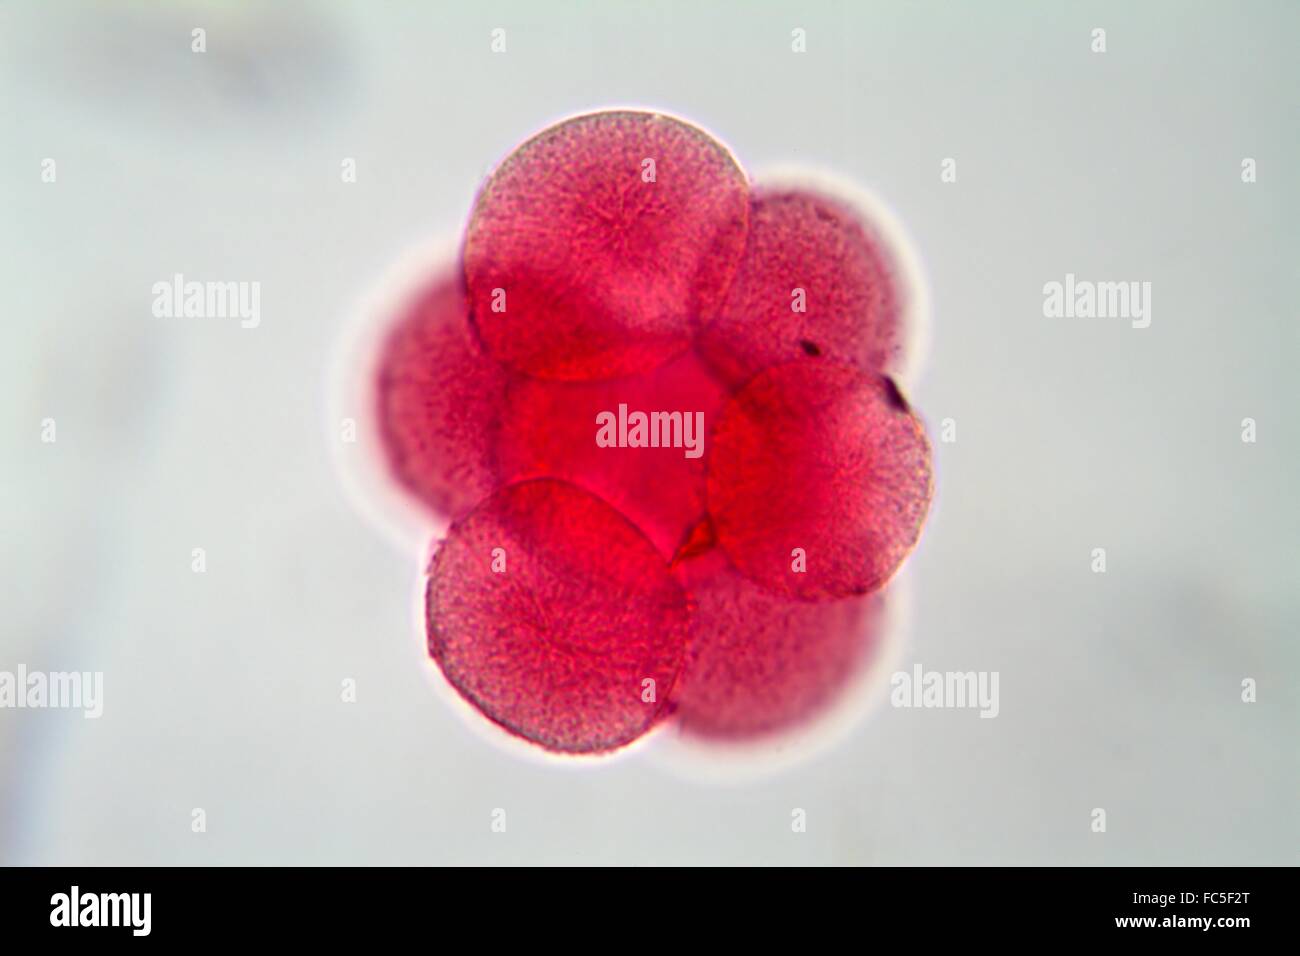 Eizelle unter dem Mikroskop Stockfoto